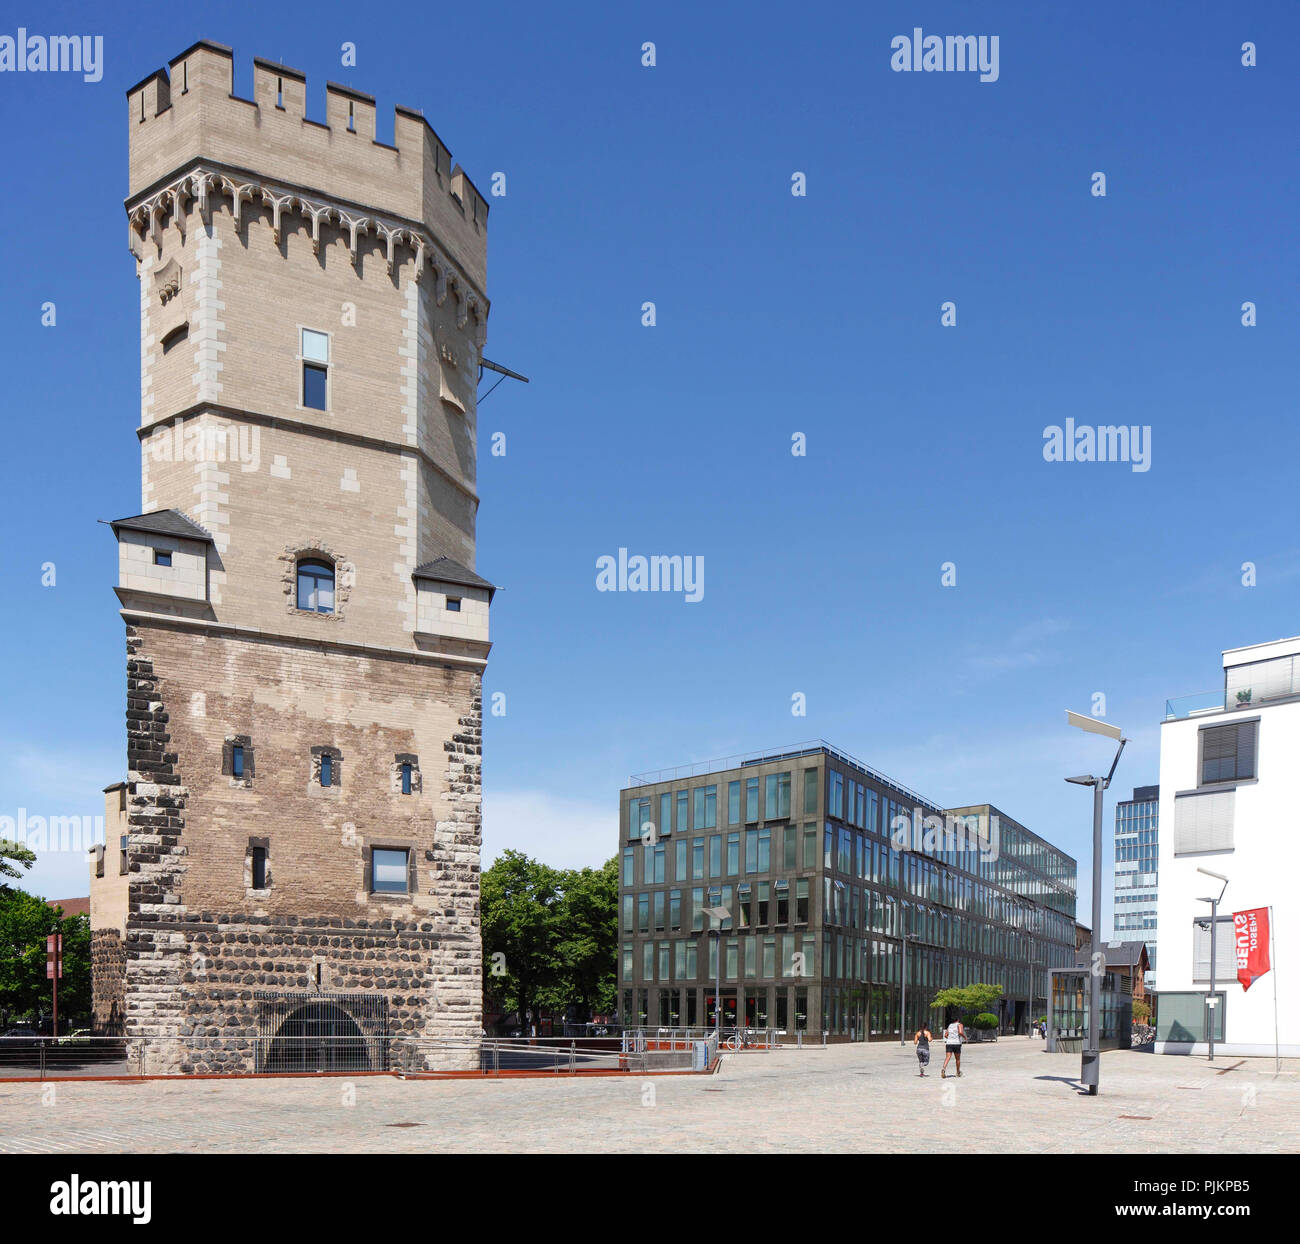 Bayenturm, medieval fortified tower, seat of the charitable foundation "FrauenMediaTurm", Cologne-Bayenthal, Rheinauhafen, Cologne, North Rhine-Westphalia, Germany, Europe Stock Photo